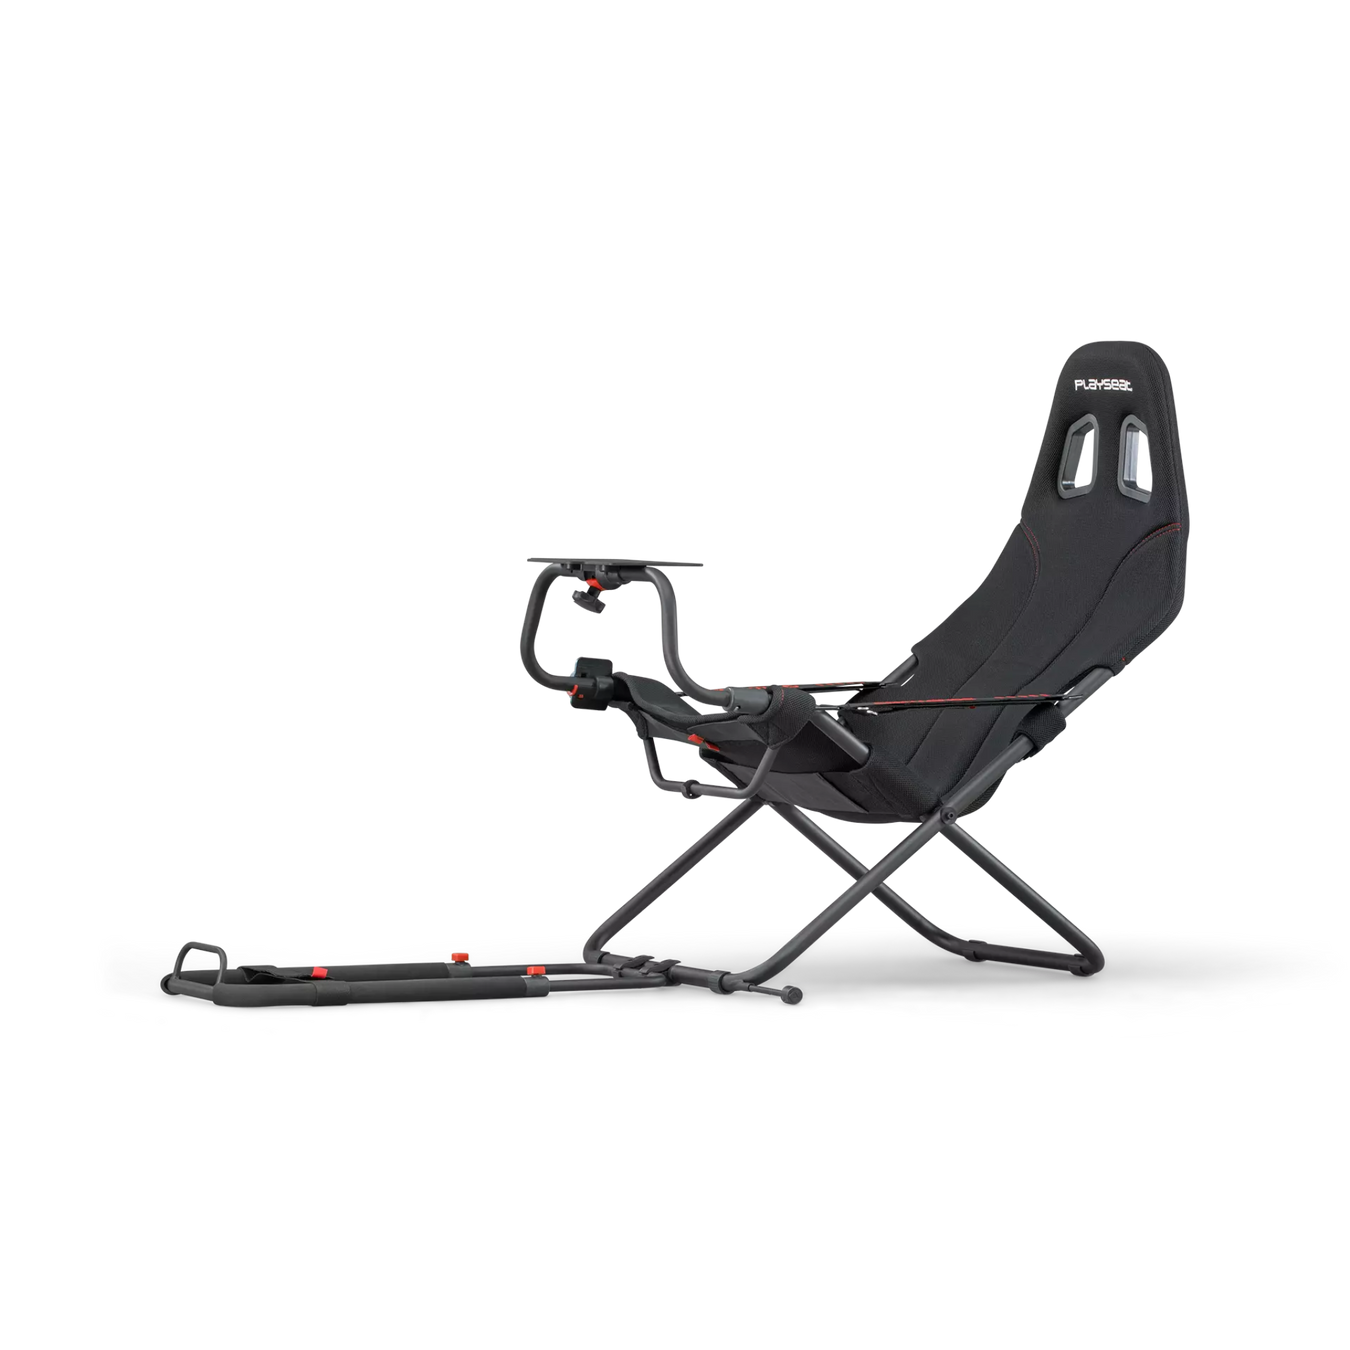 Racing Simulator Game Chairs